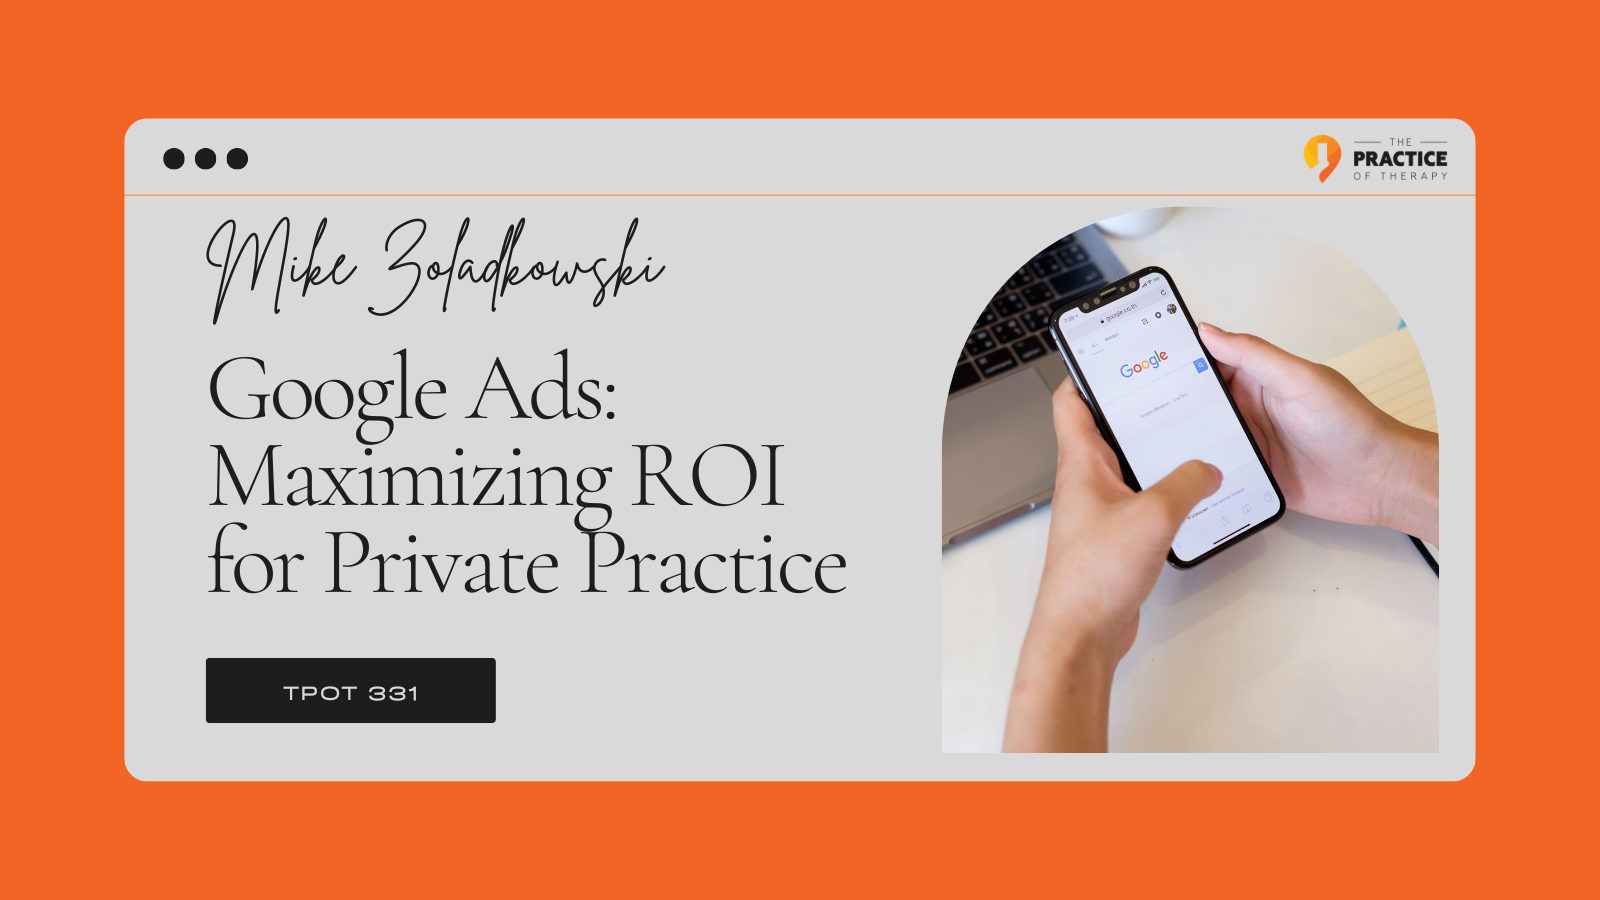 Mike Zoladkowski Google Ads Maximizing ROI for Private Practice TPOT 331